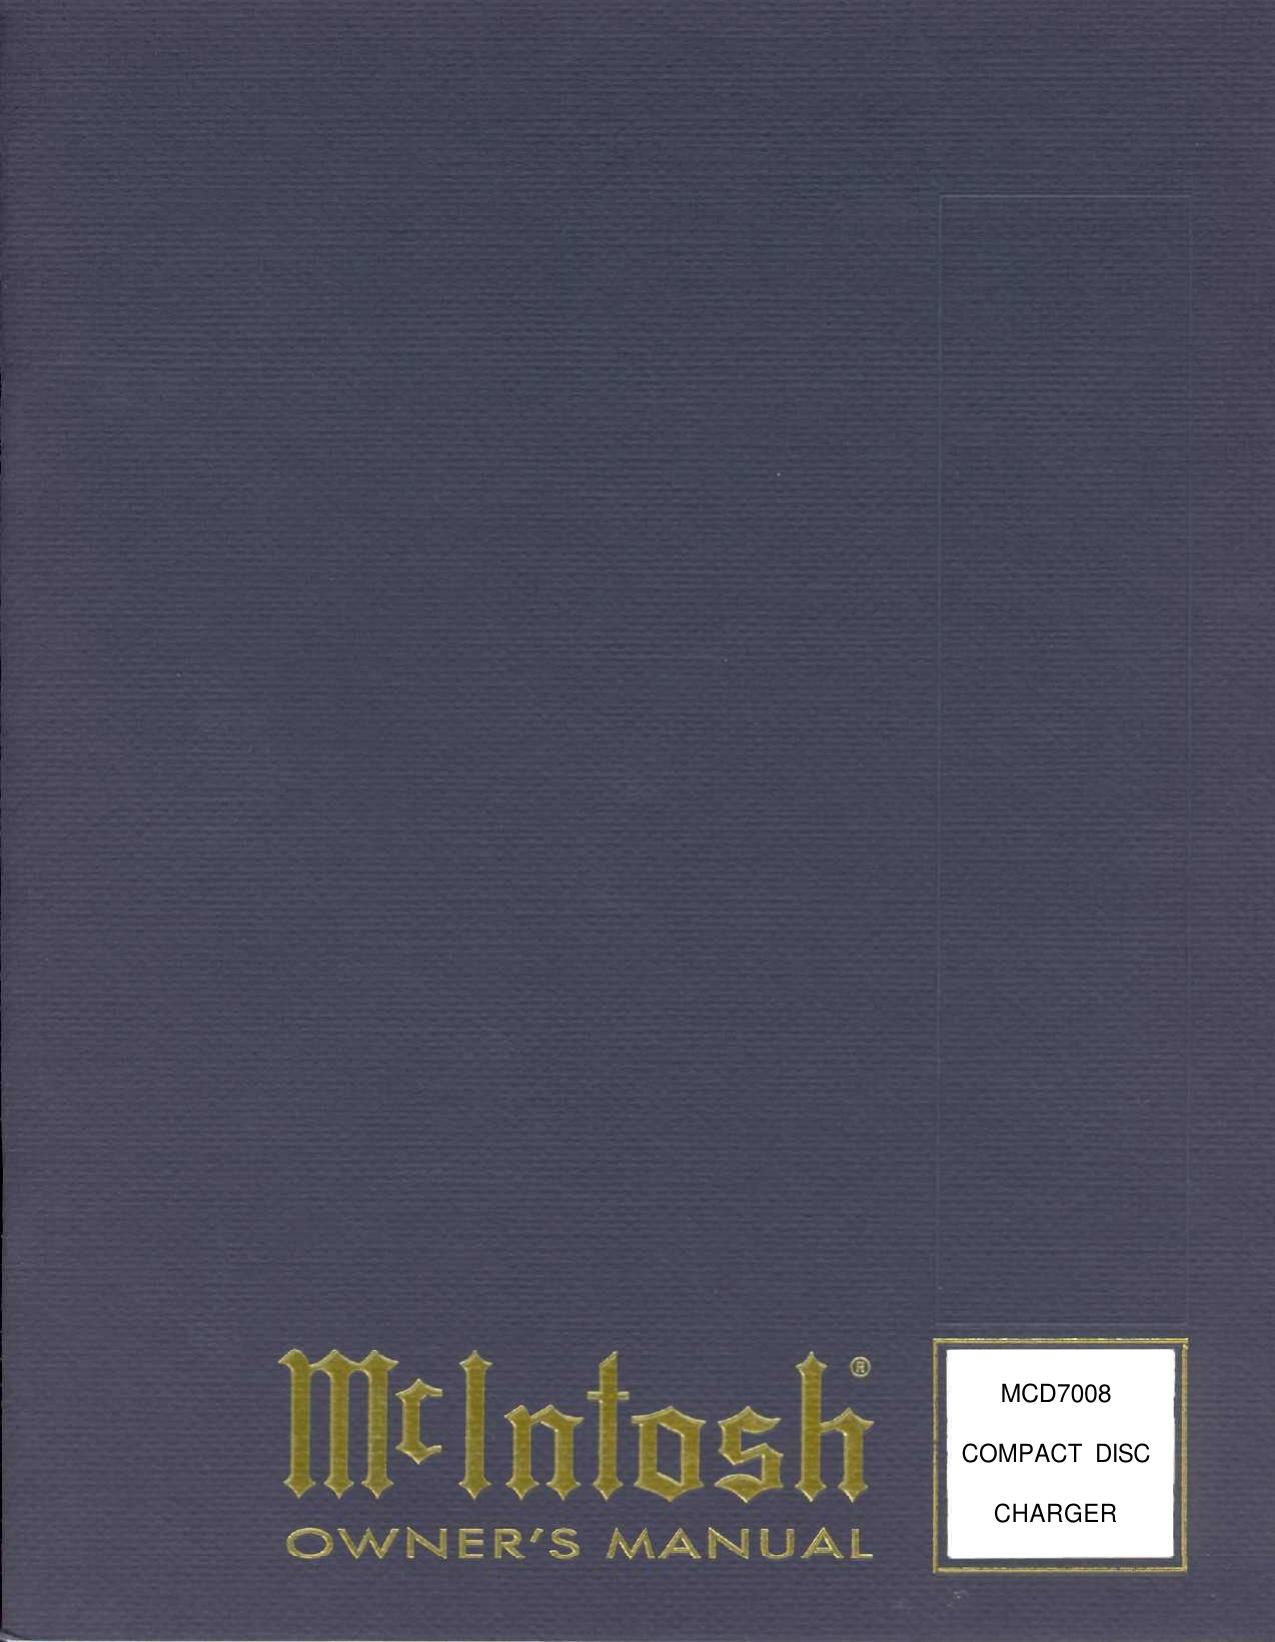 McIntosh MCD 7008 Owners Manual